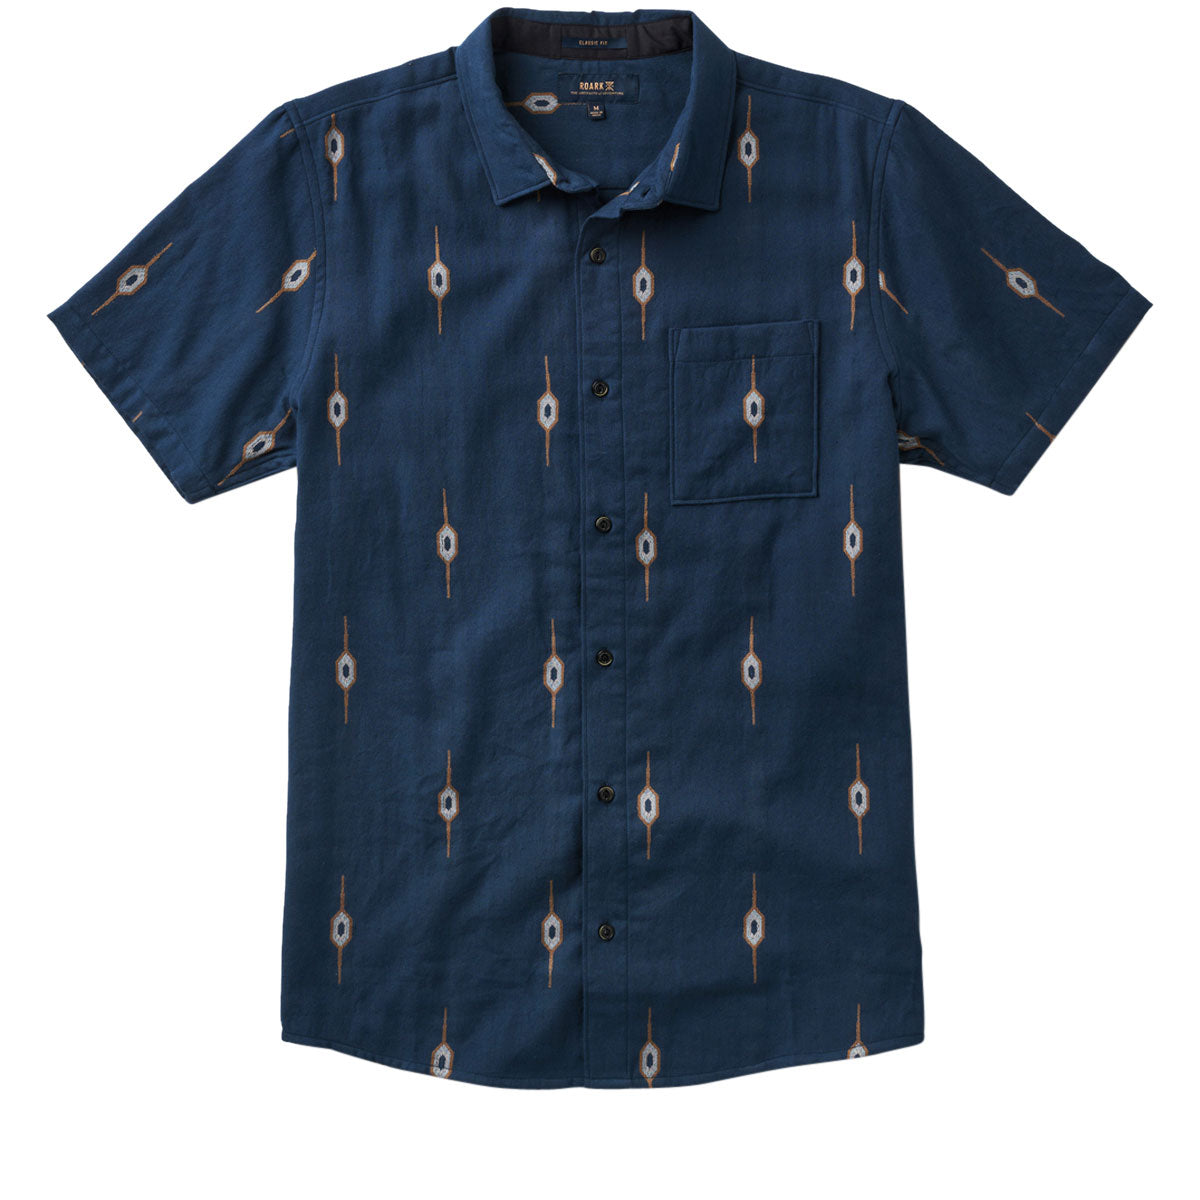 Roark Journey Woven Shirt - Castagno Nannai Blue image 4